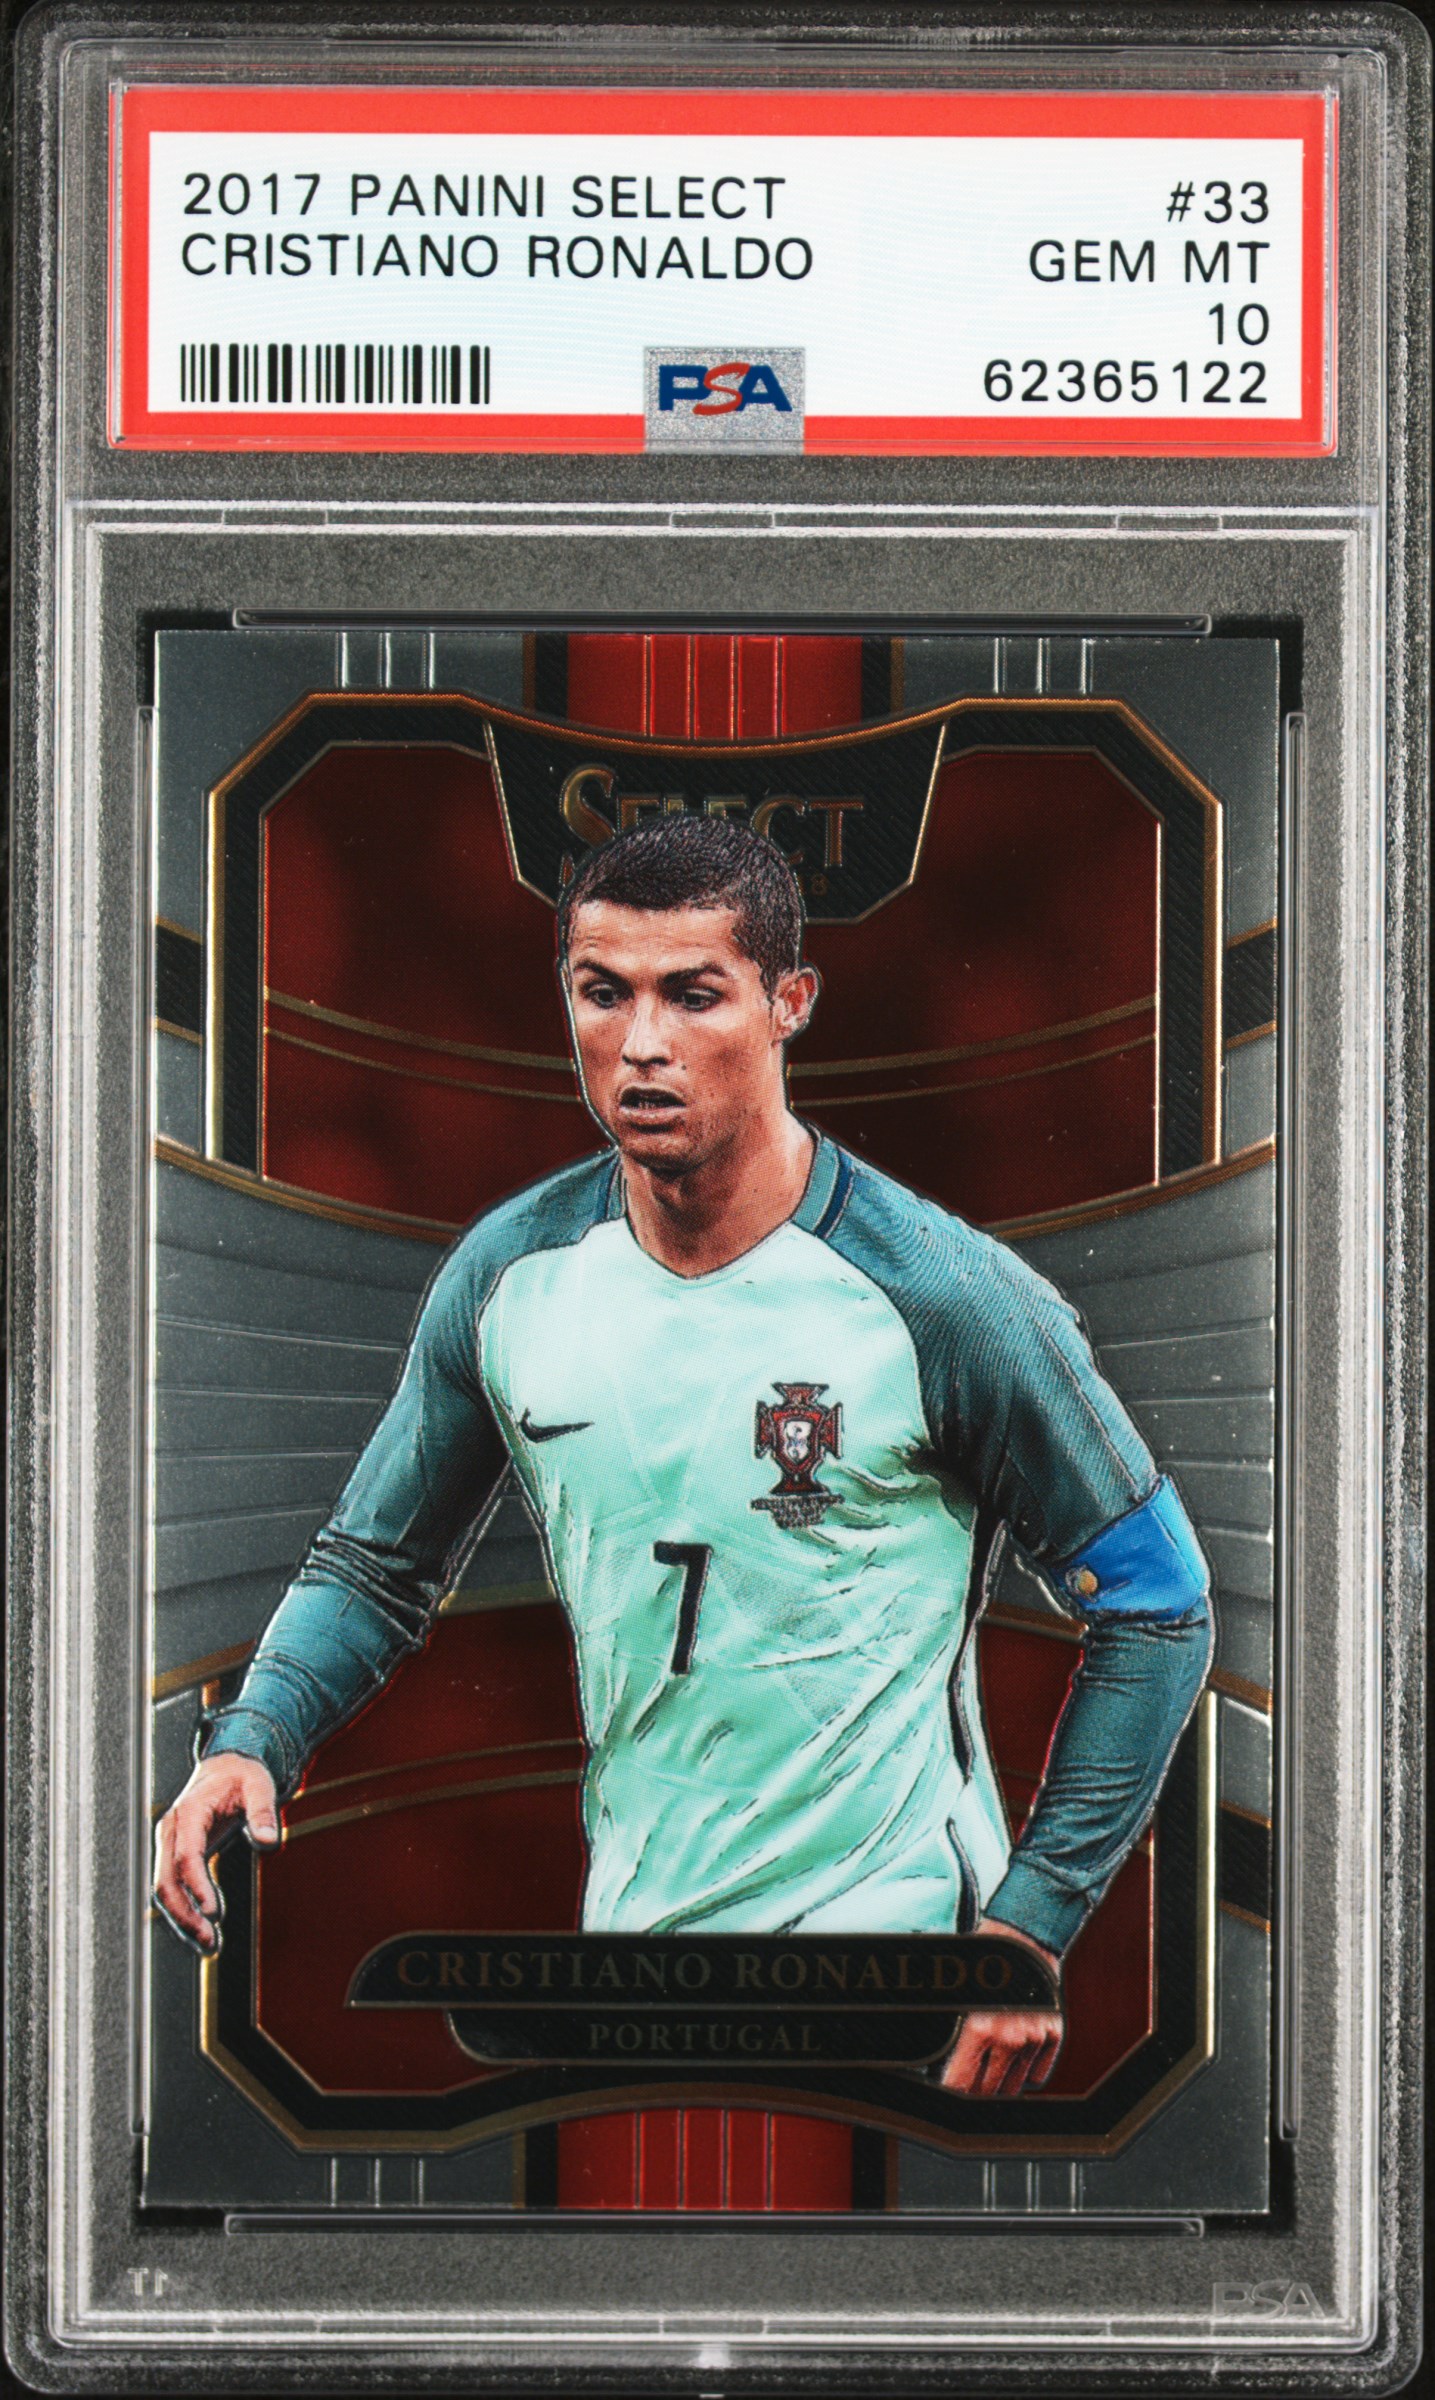 2017-18 Panini Select #33 Cristiano Ronaldo – PSA GEM MT 10